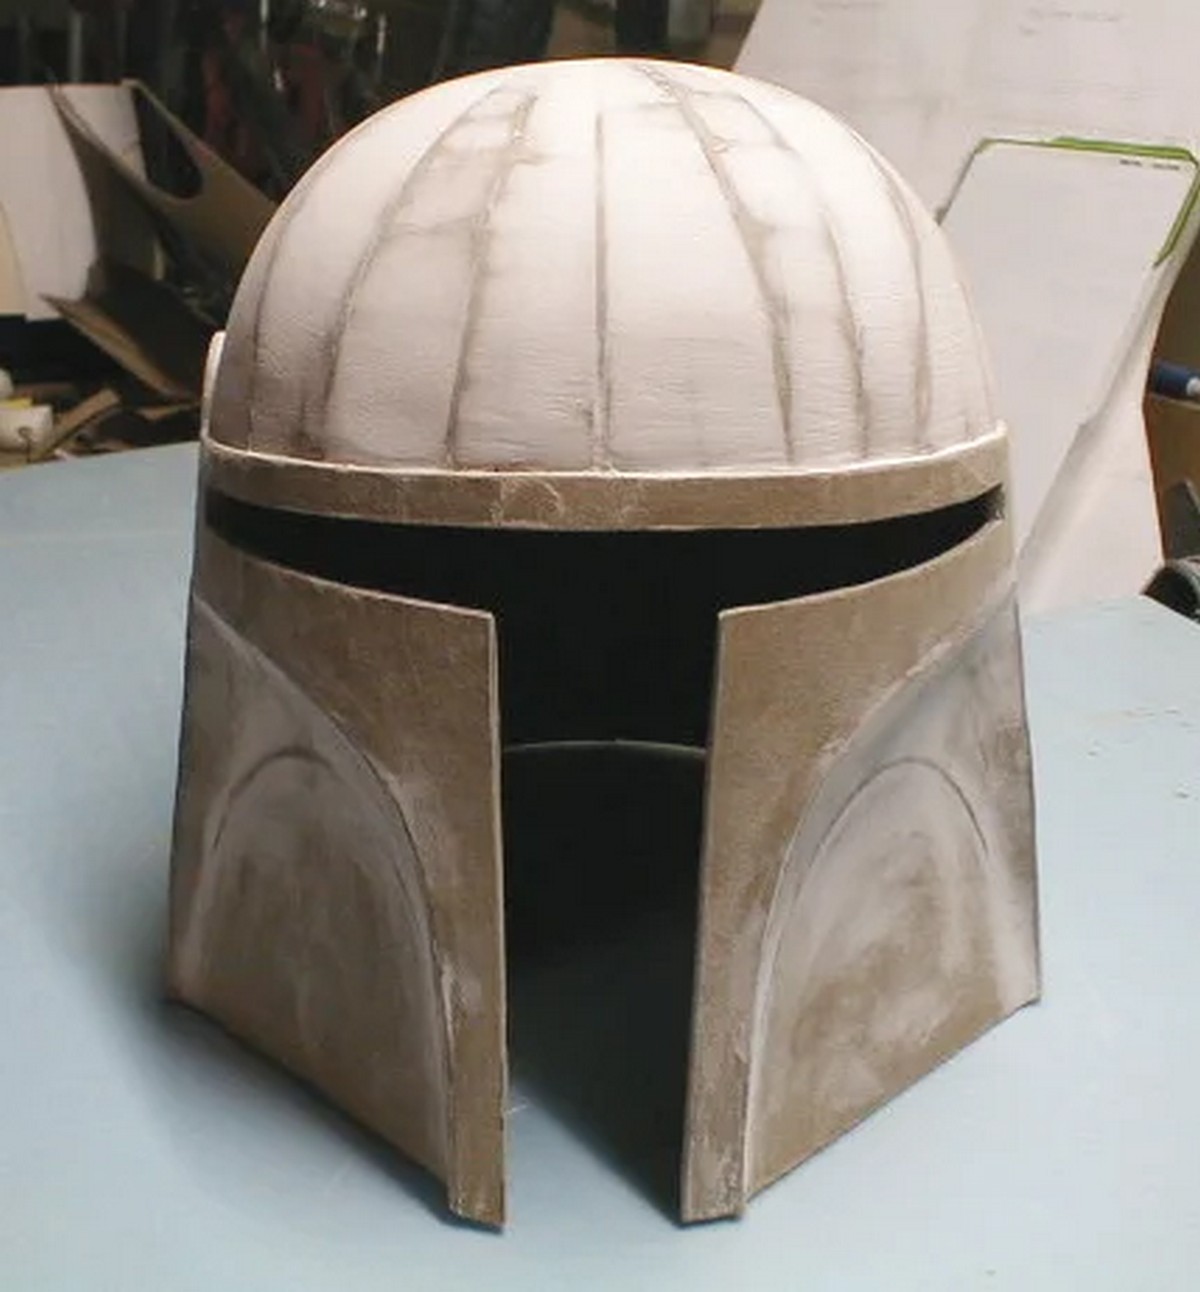 Make A Cardboard Costume Helmet